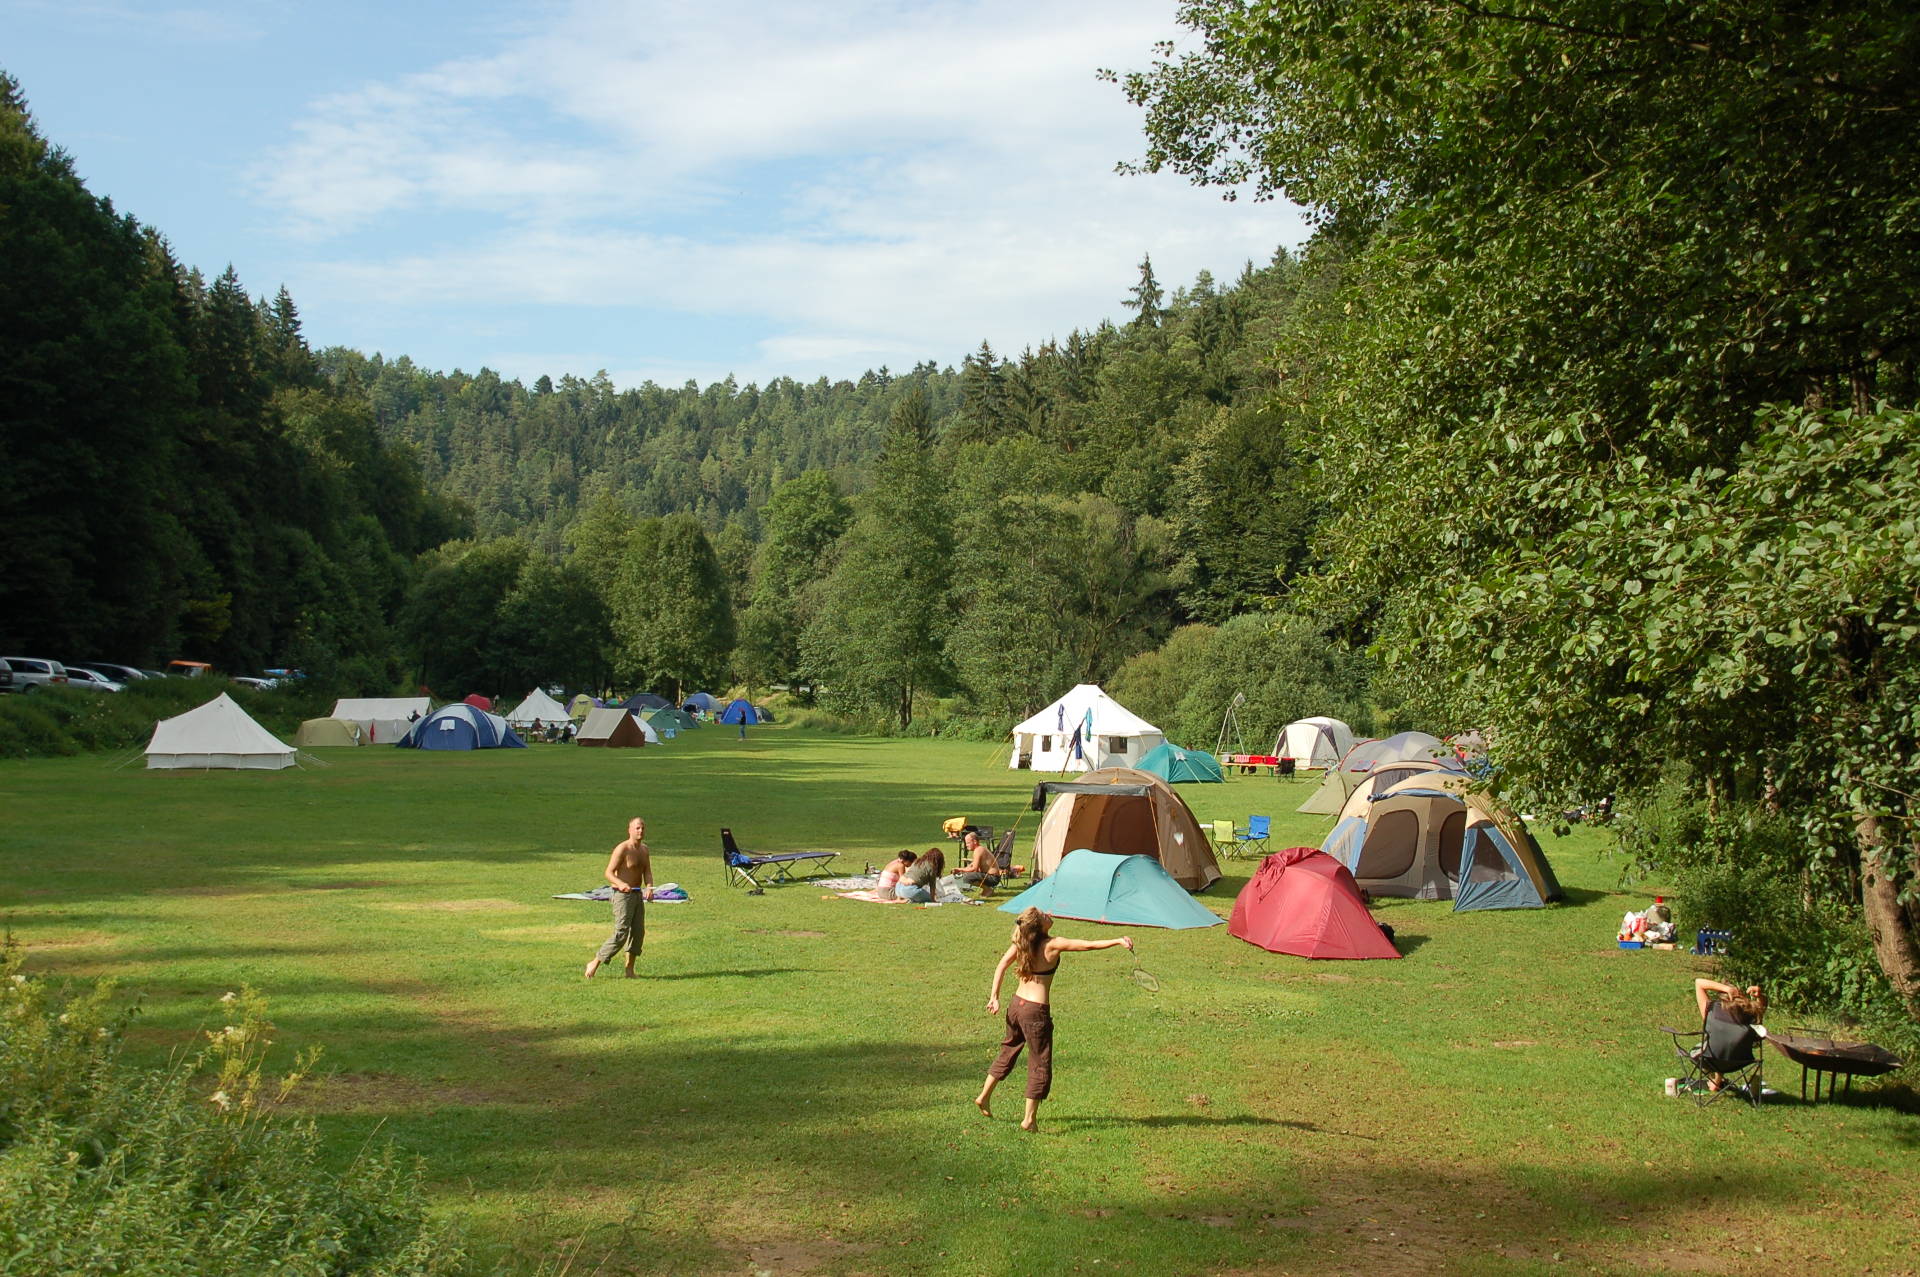 Camp ground